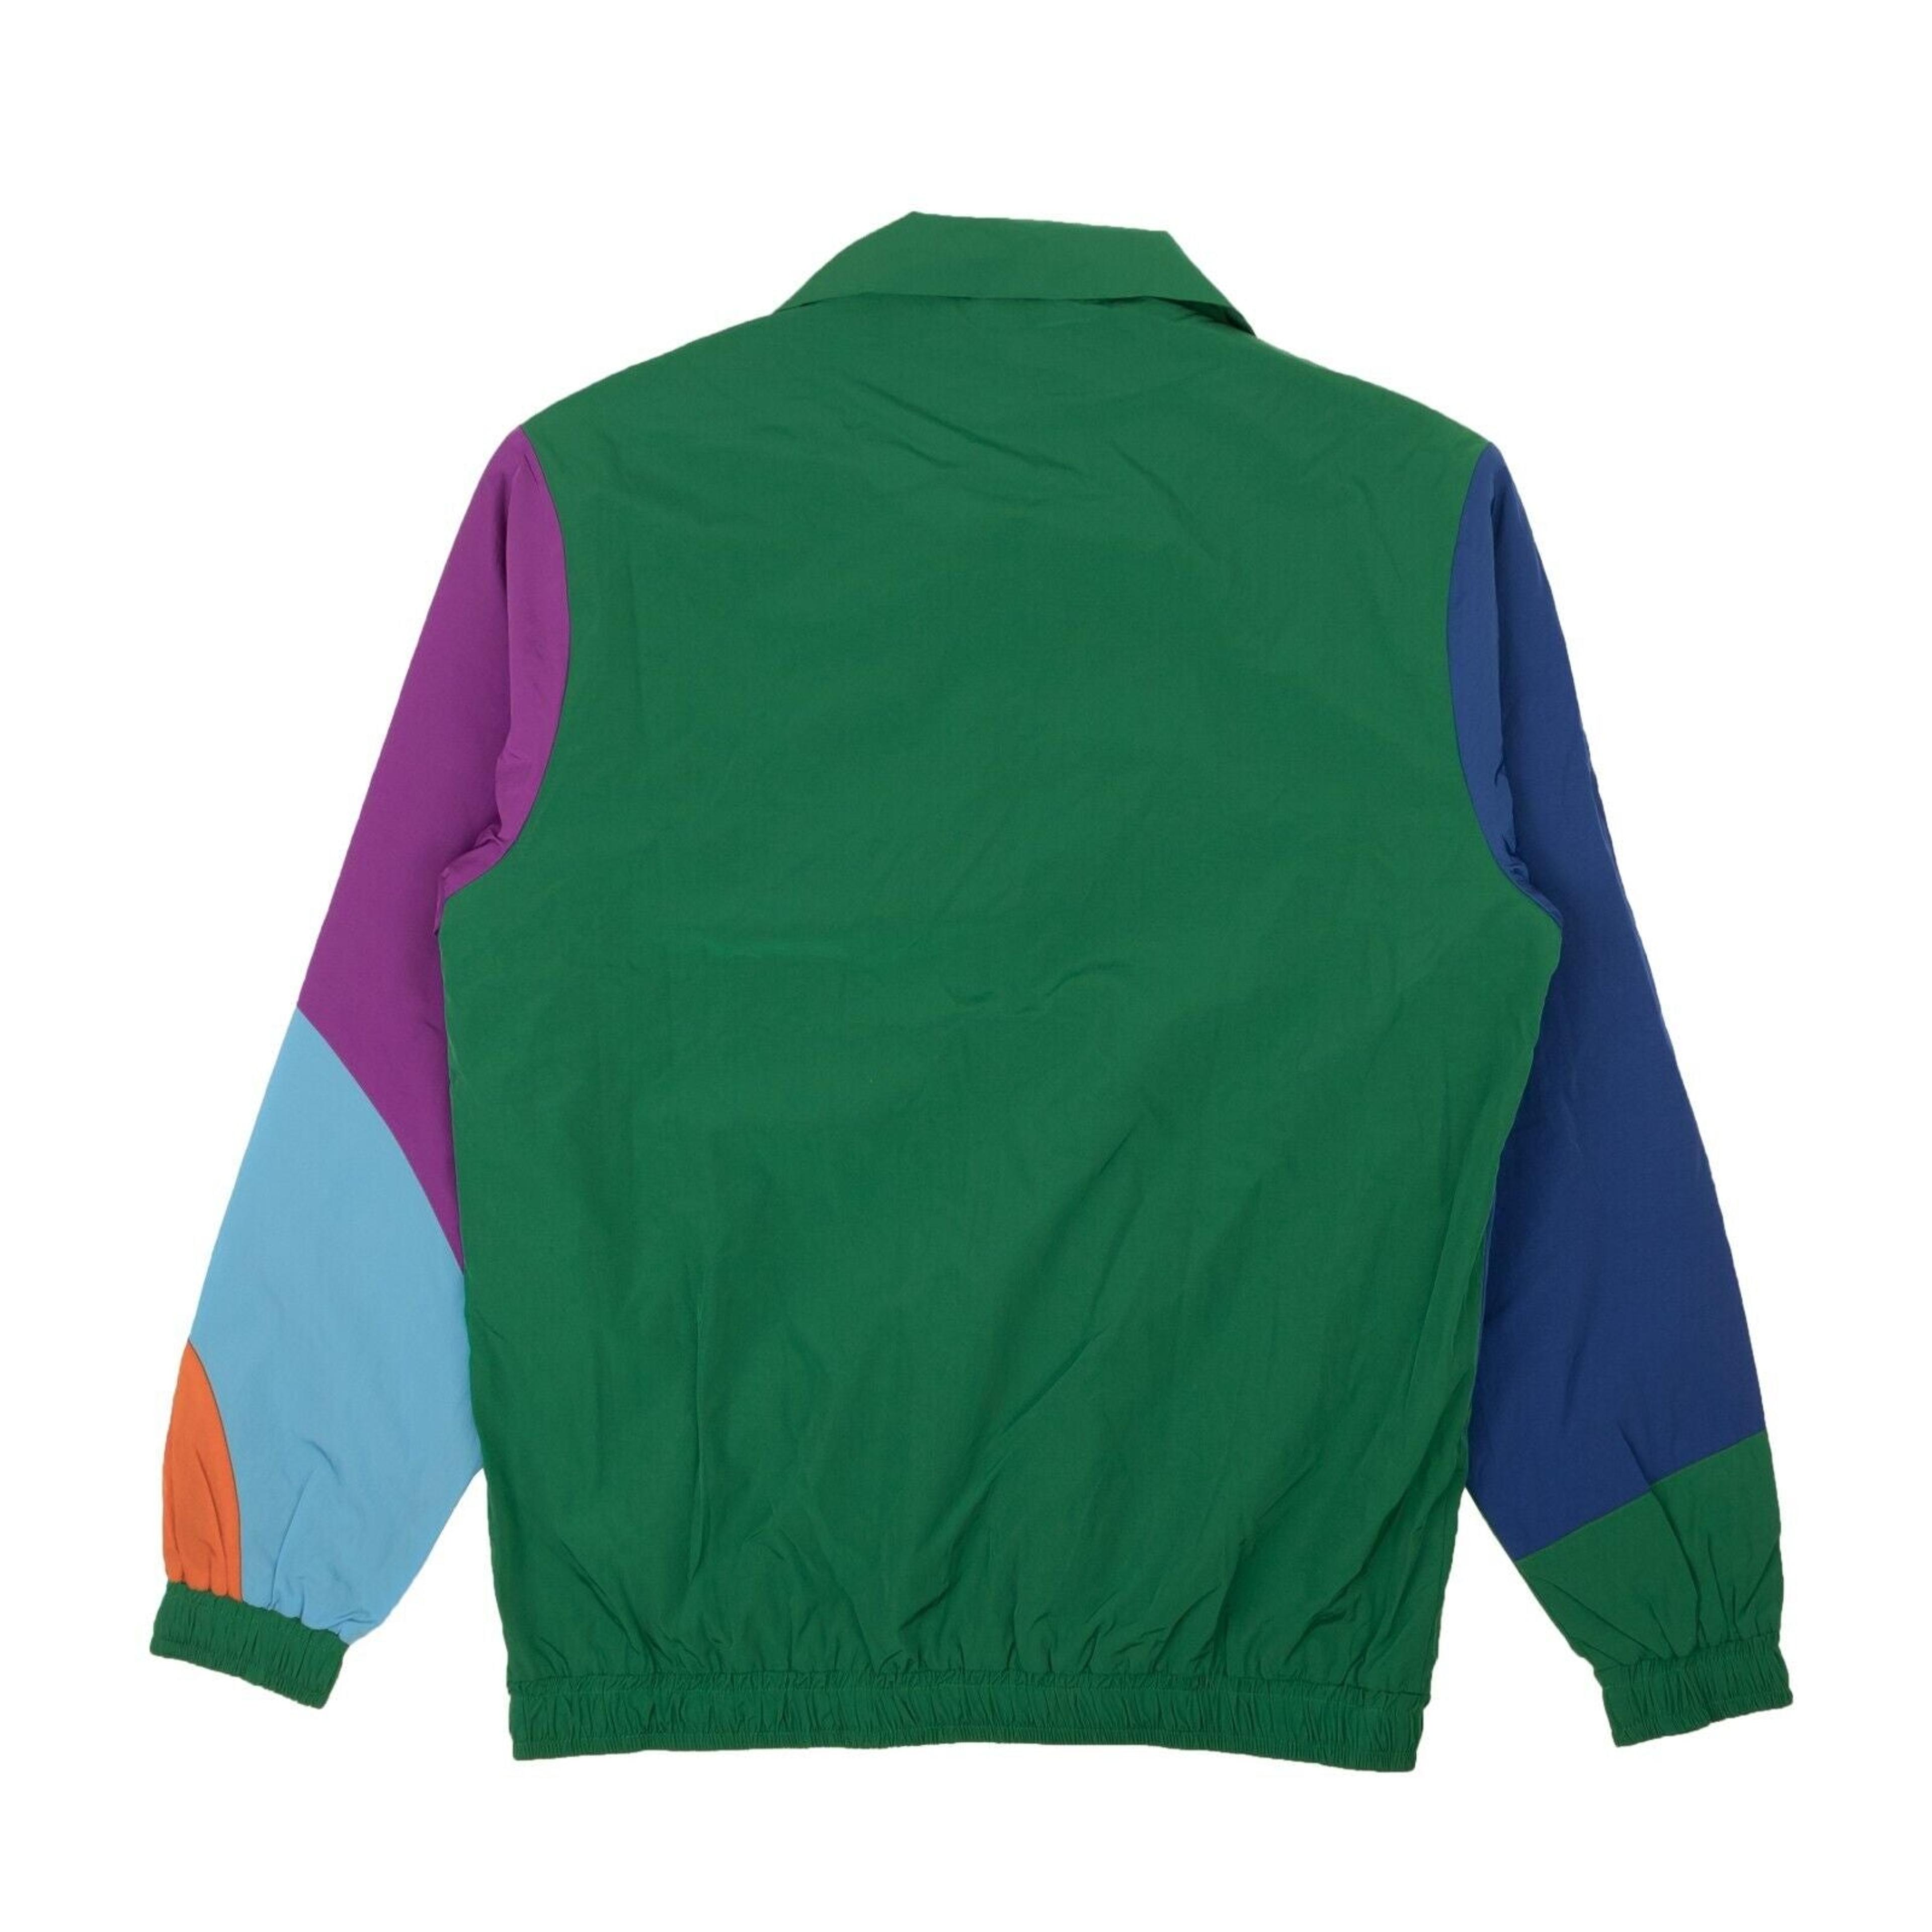 Alternate View 3 of Multicolor Geometric Nylon Track Jacket